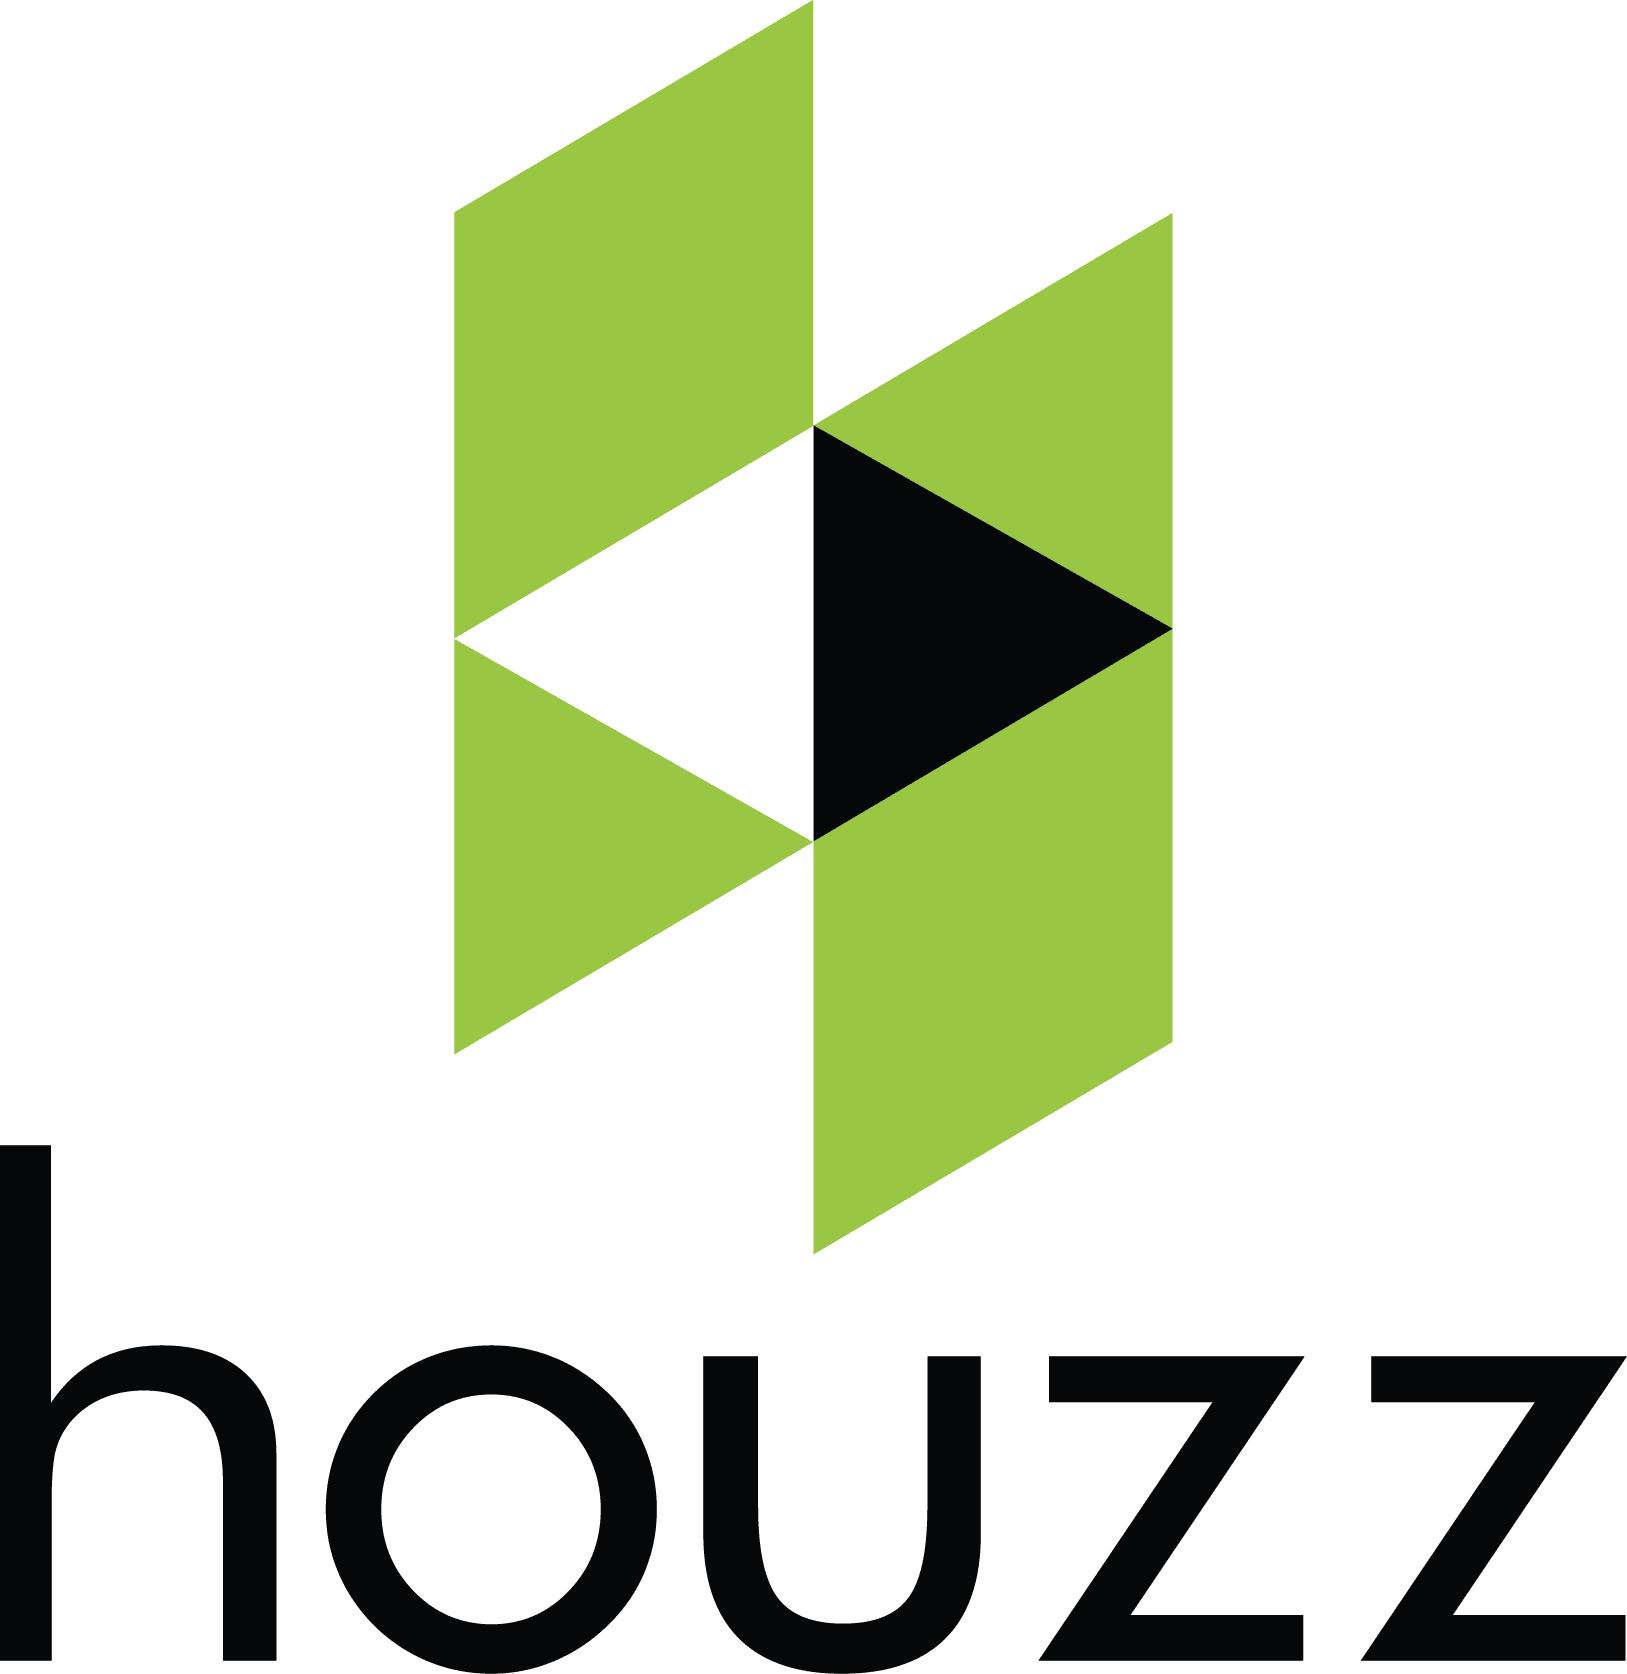 Houzz & Home 2014 Survey Results